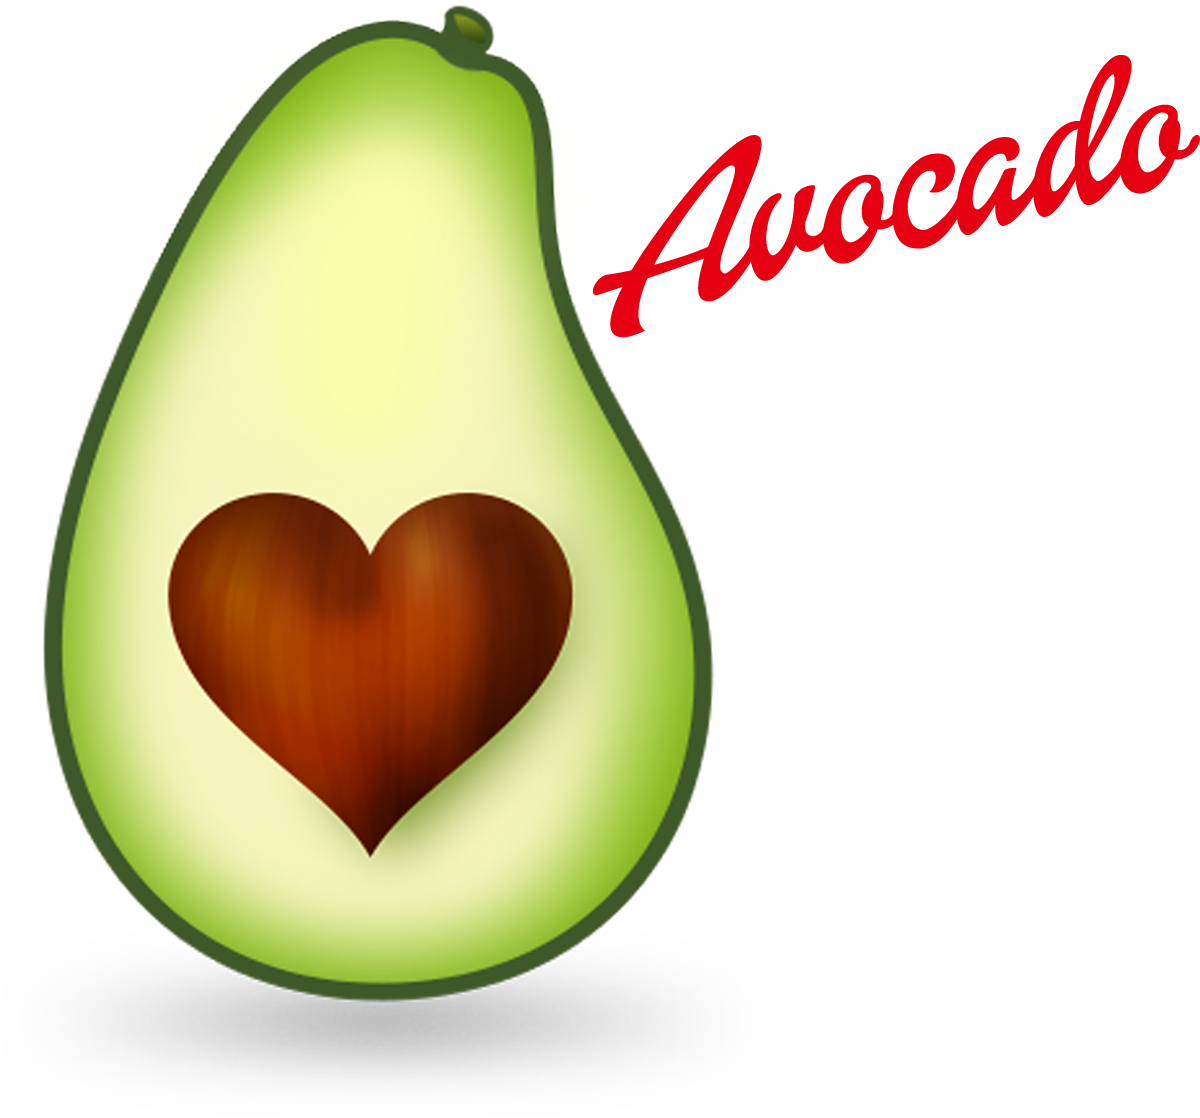 Avocado Png Image - Avocado (1920x1200)